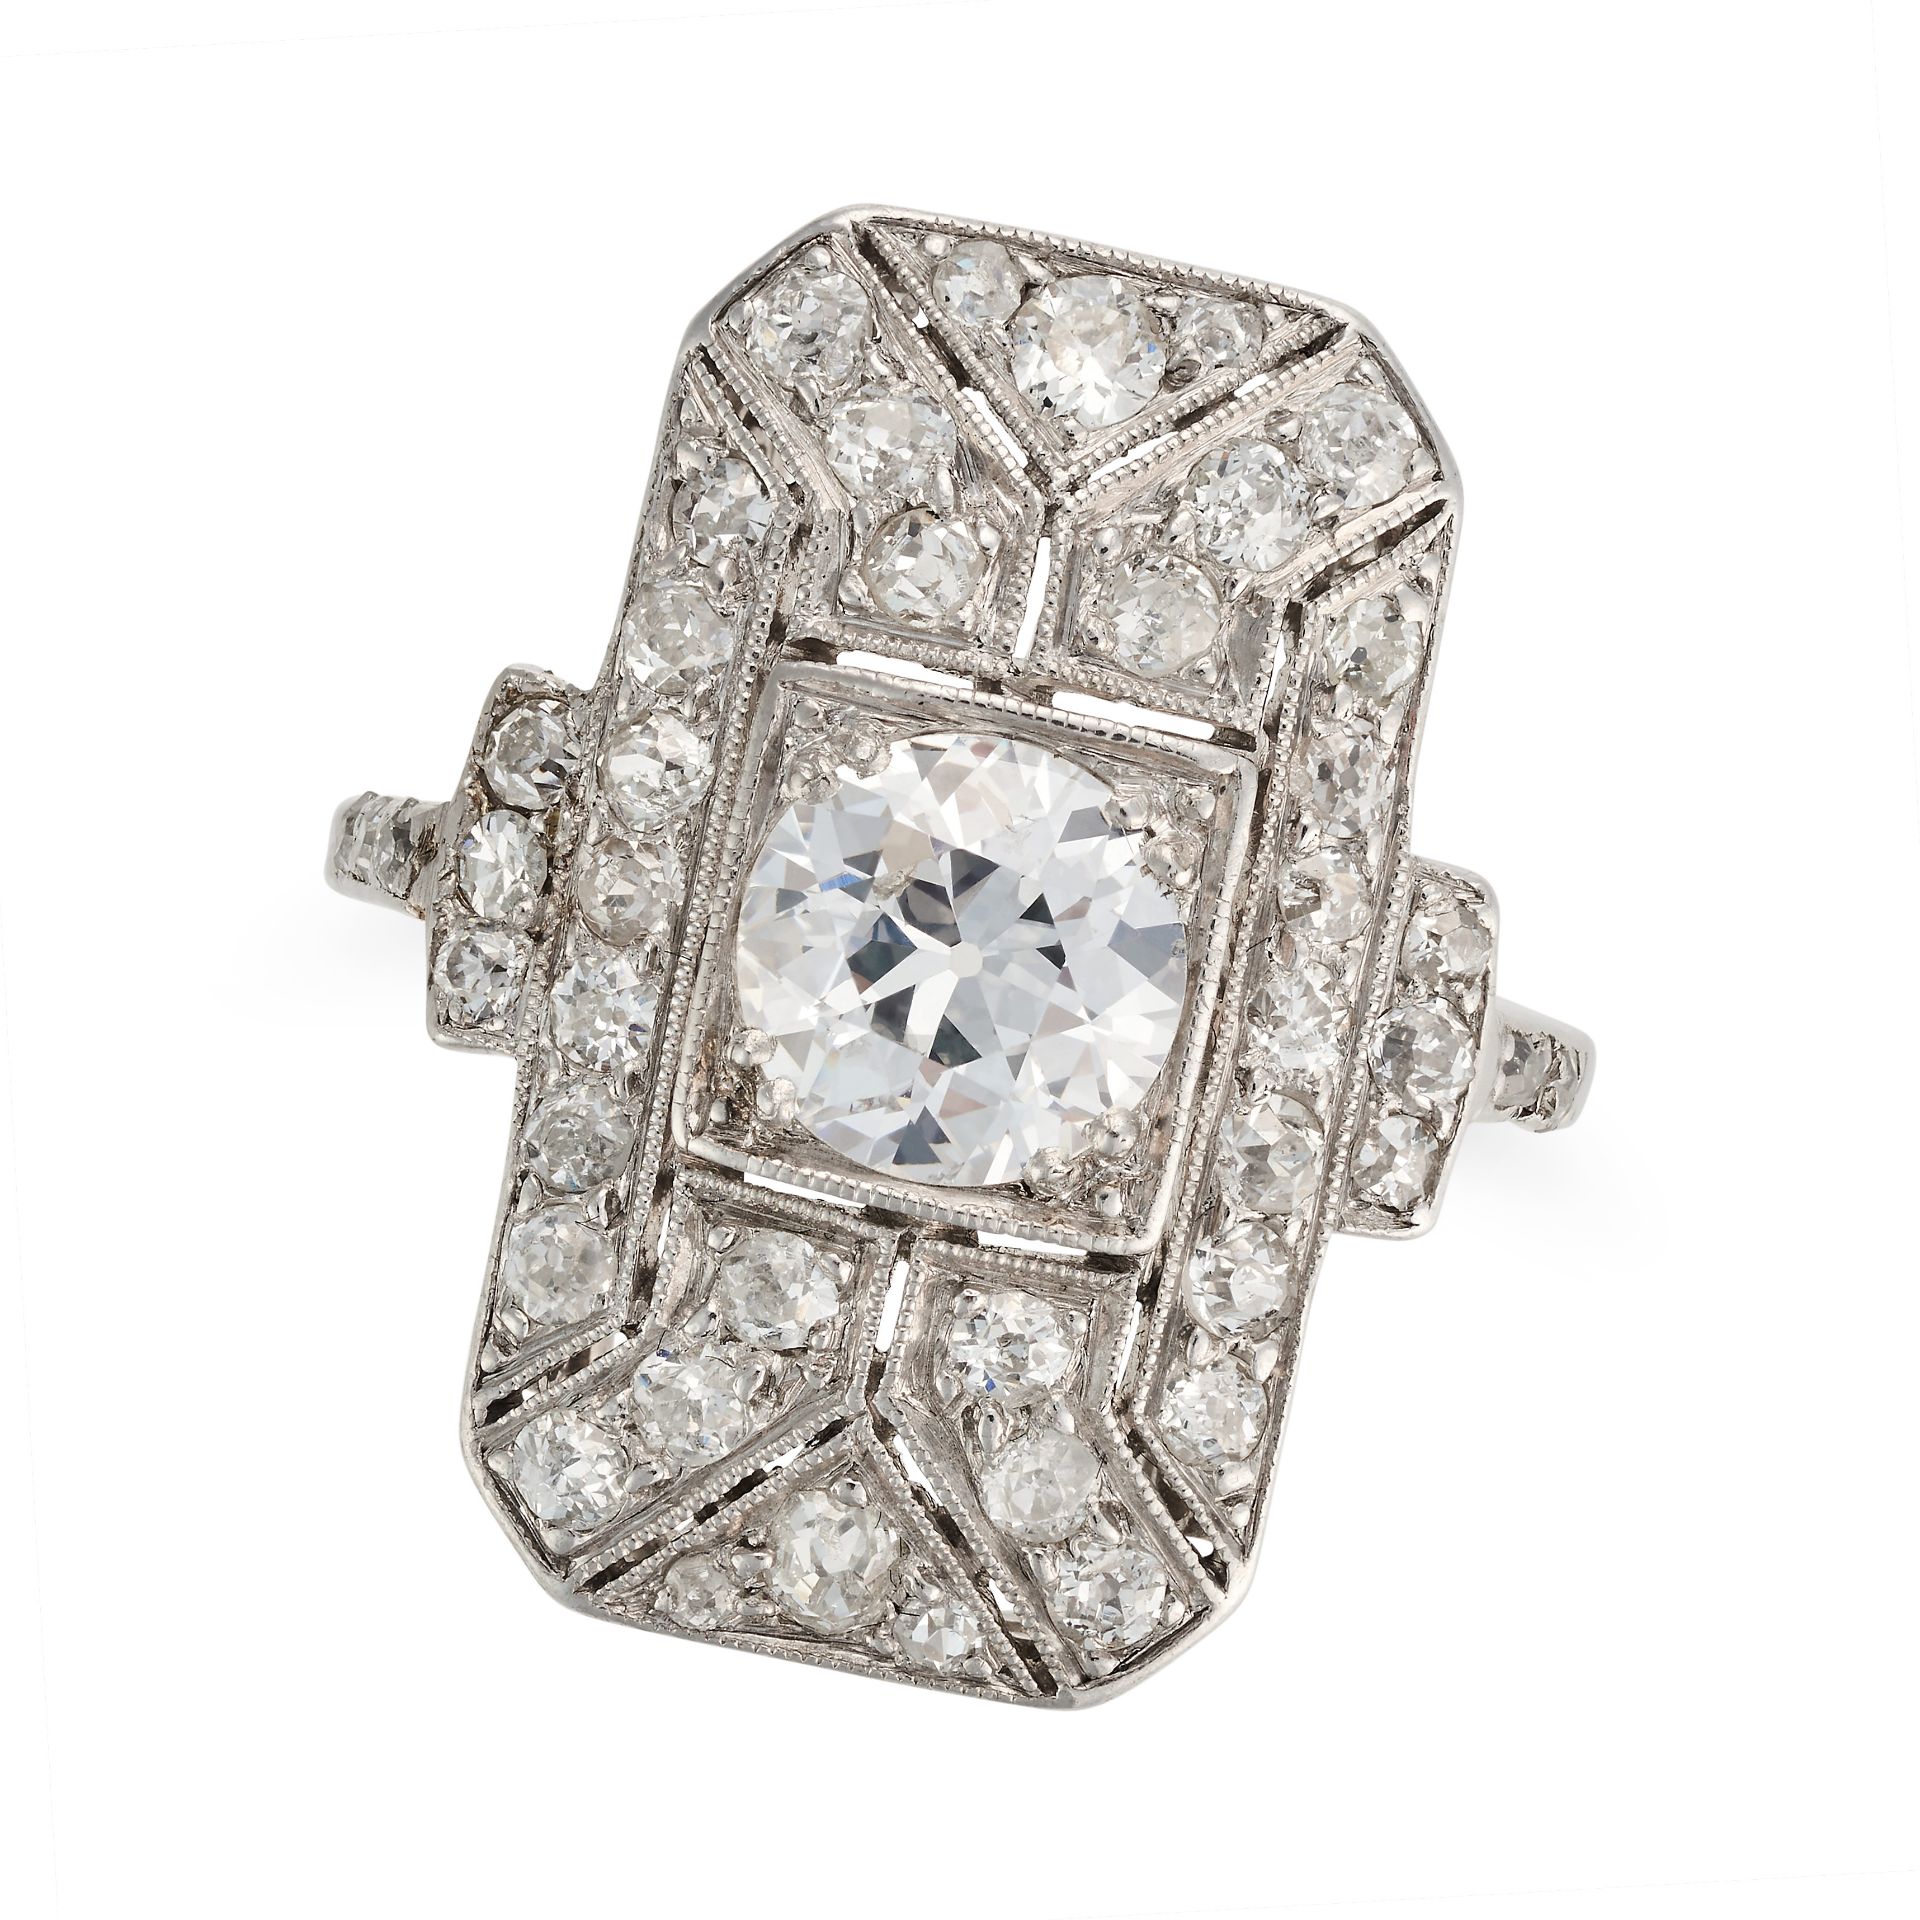 AN ANTIQUE DIAMOND DRESS RING the geometric pierced face set with an old European cut diamond of ...